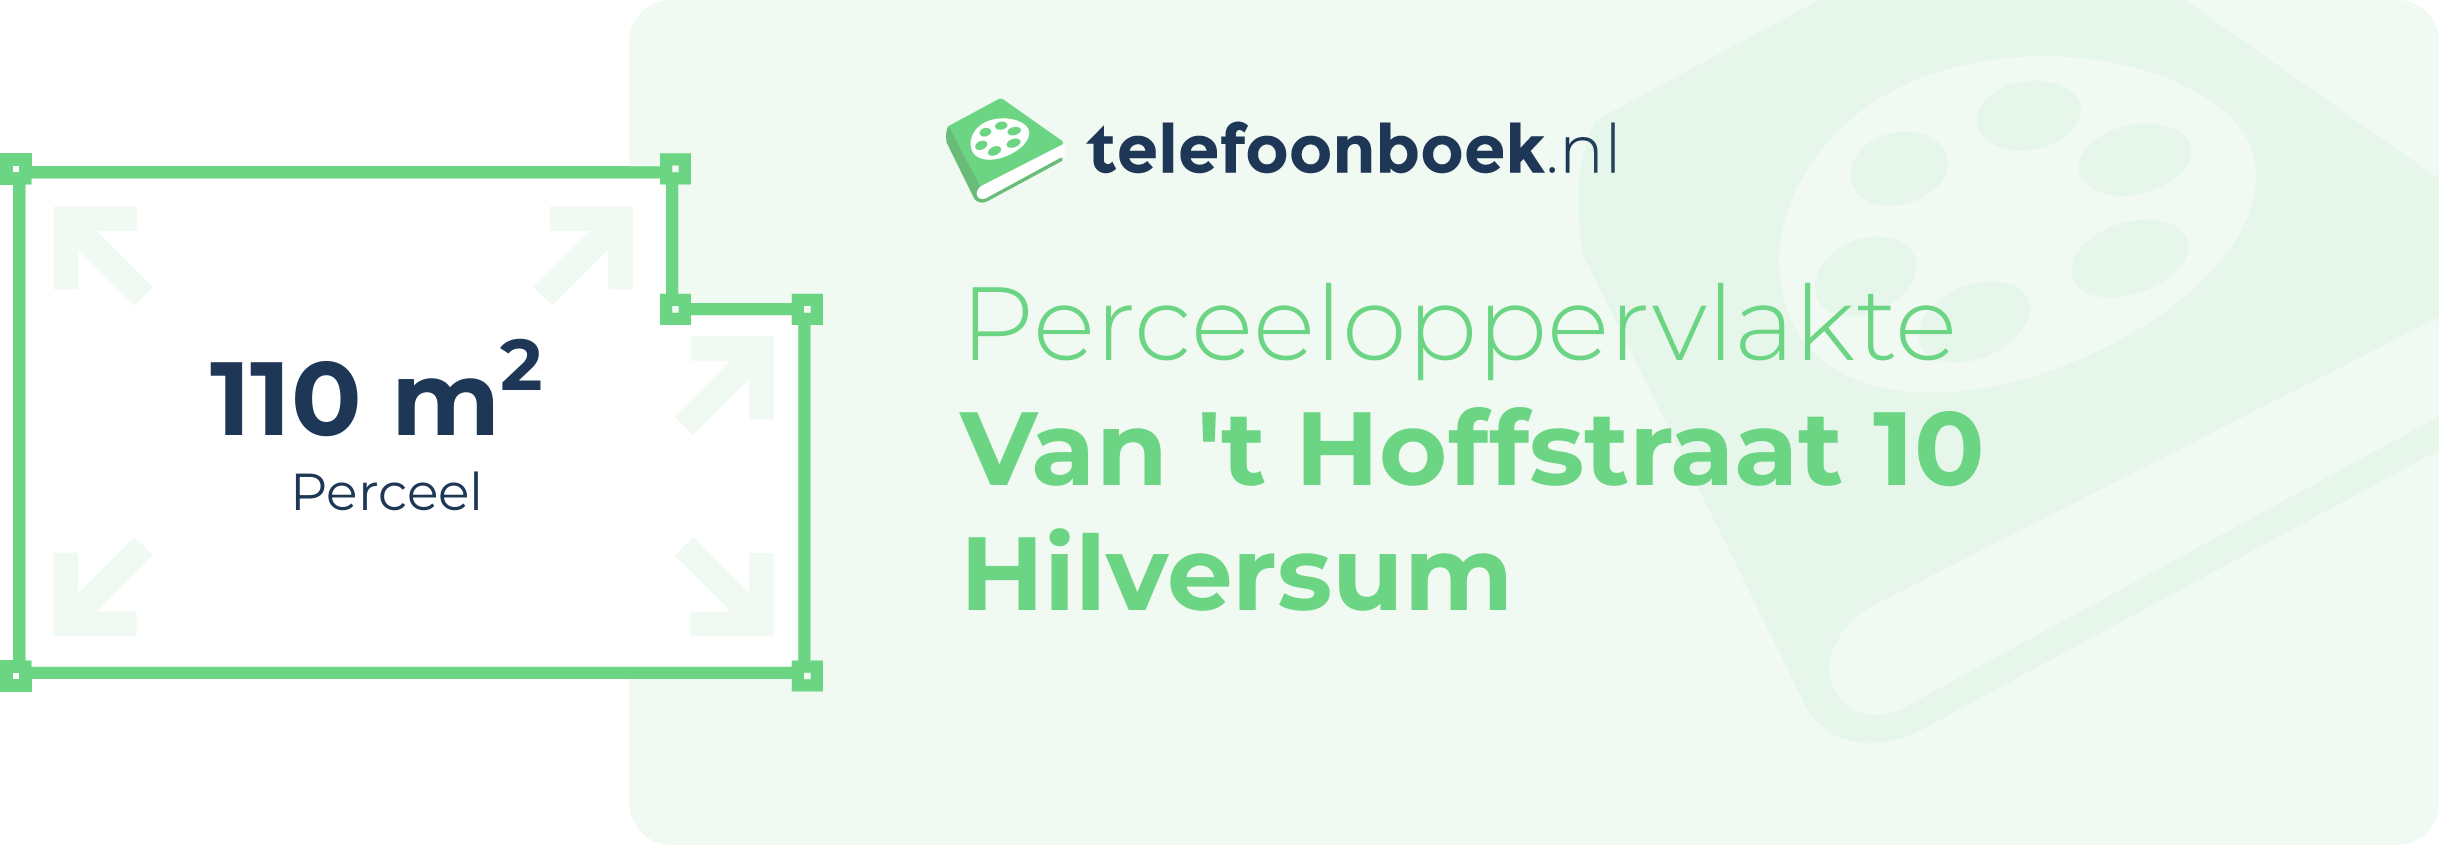 Perceeloppervlakte Van 't Hoffstraat 10 Hilversum